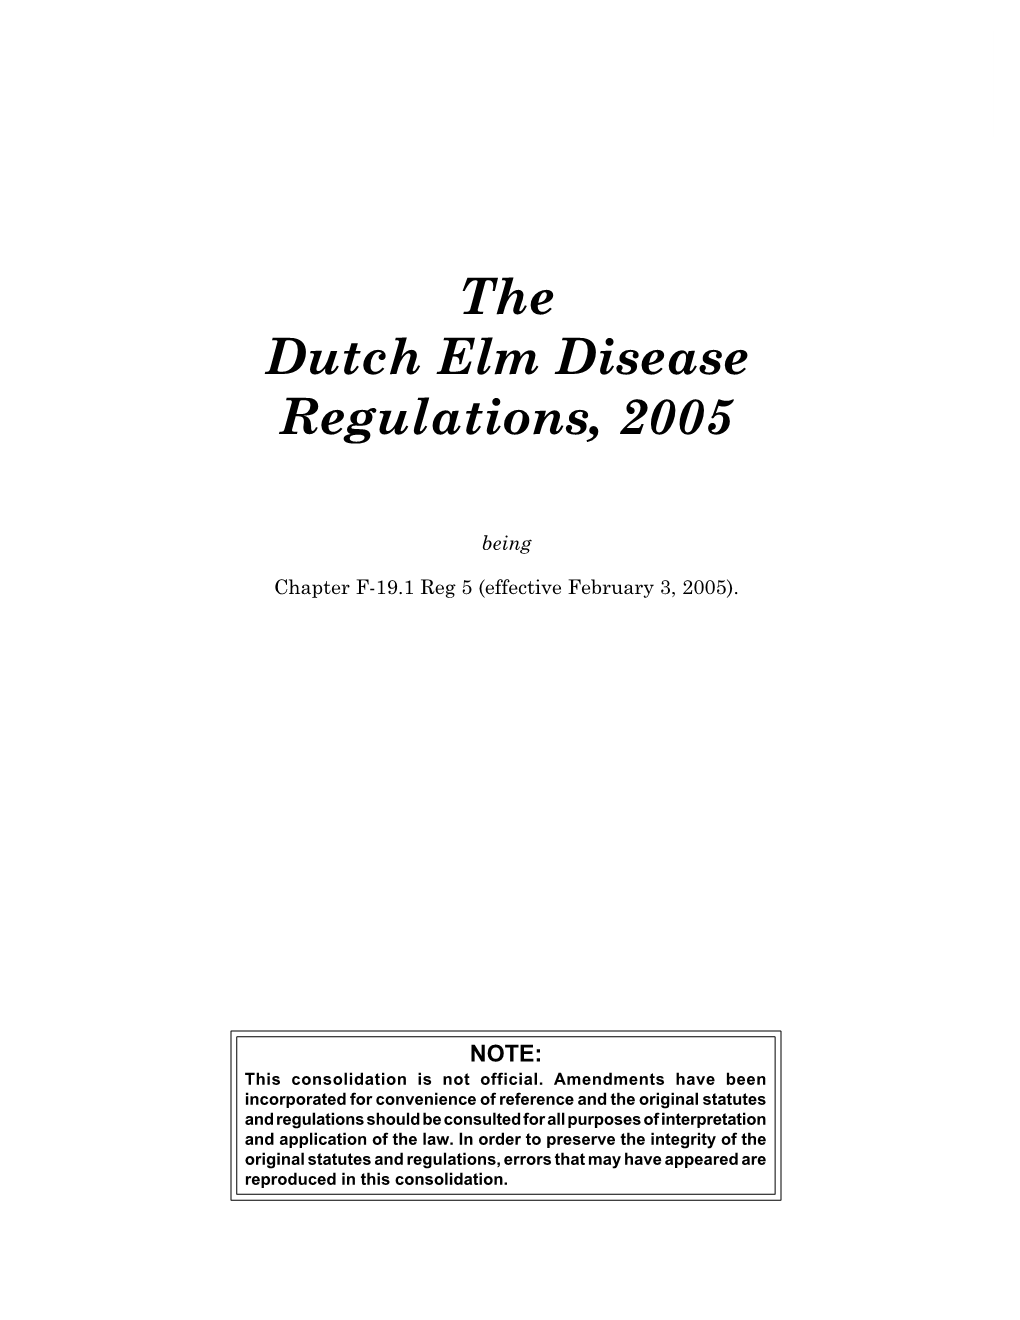 Dutch Elm Disease Regulations, 2005